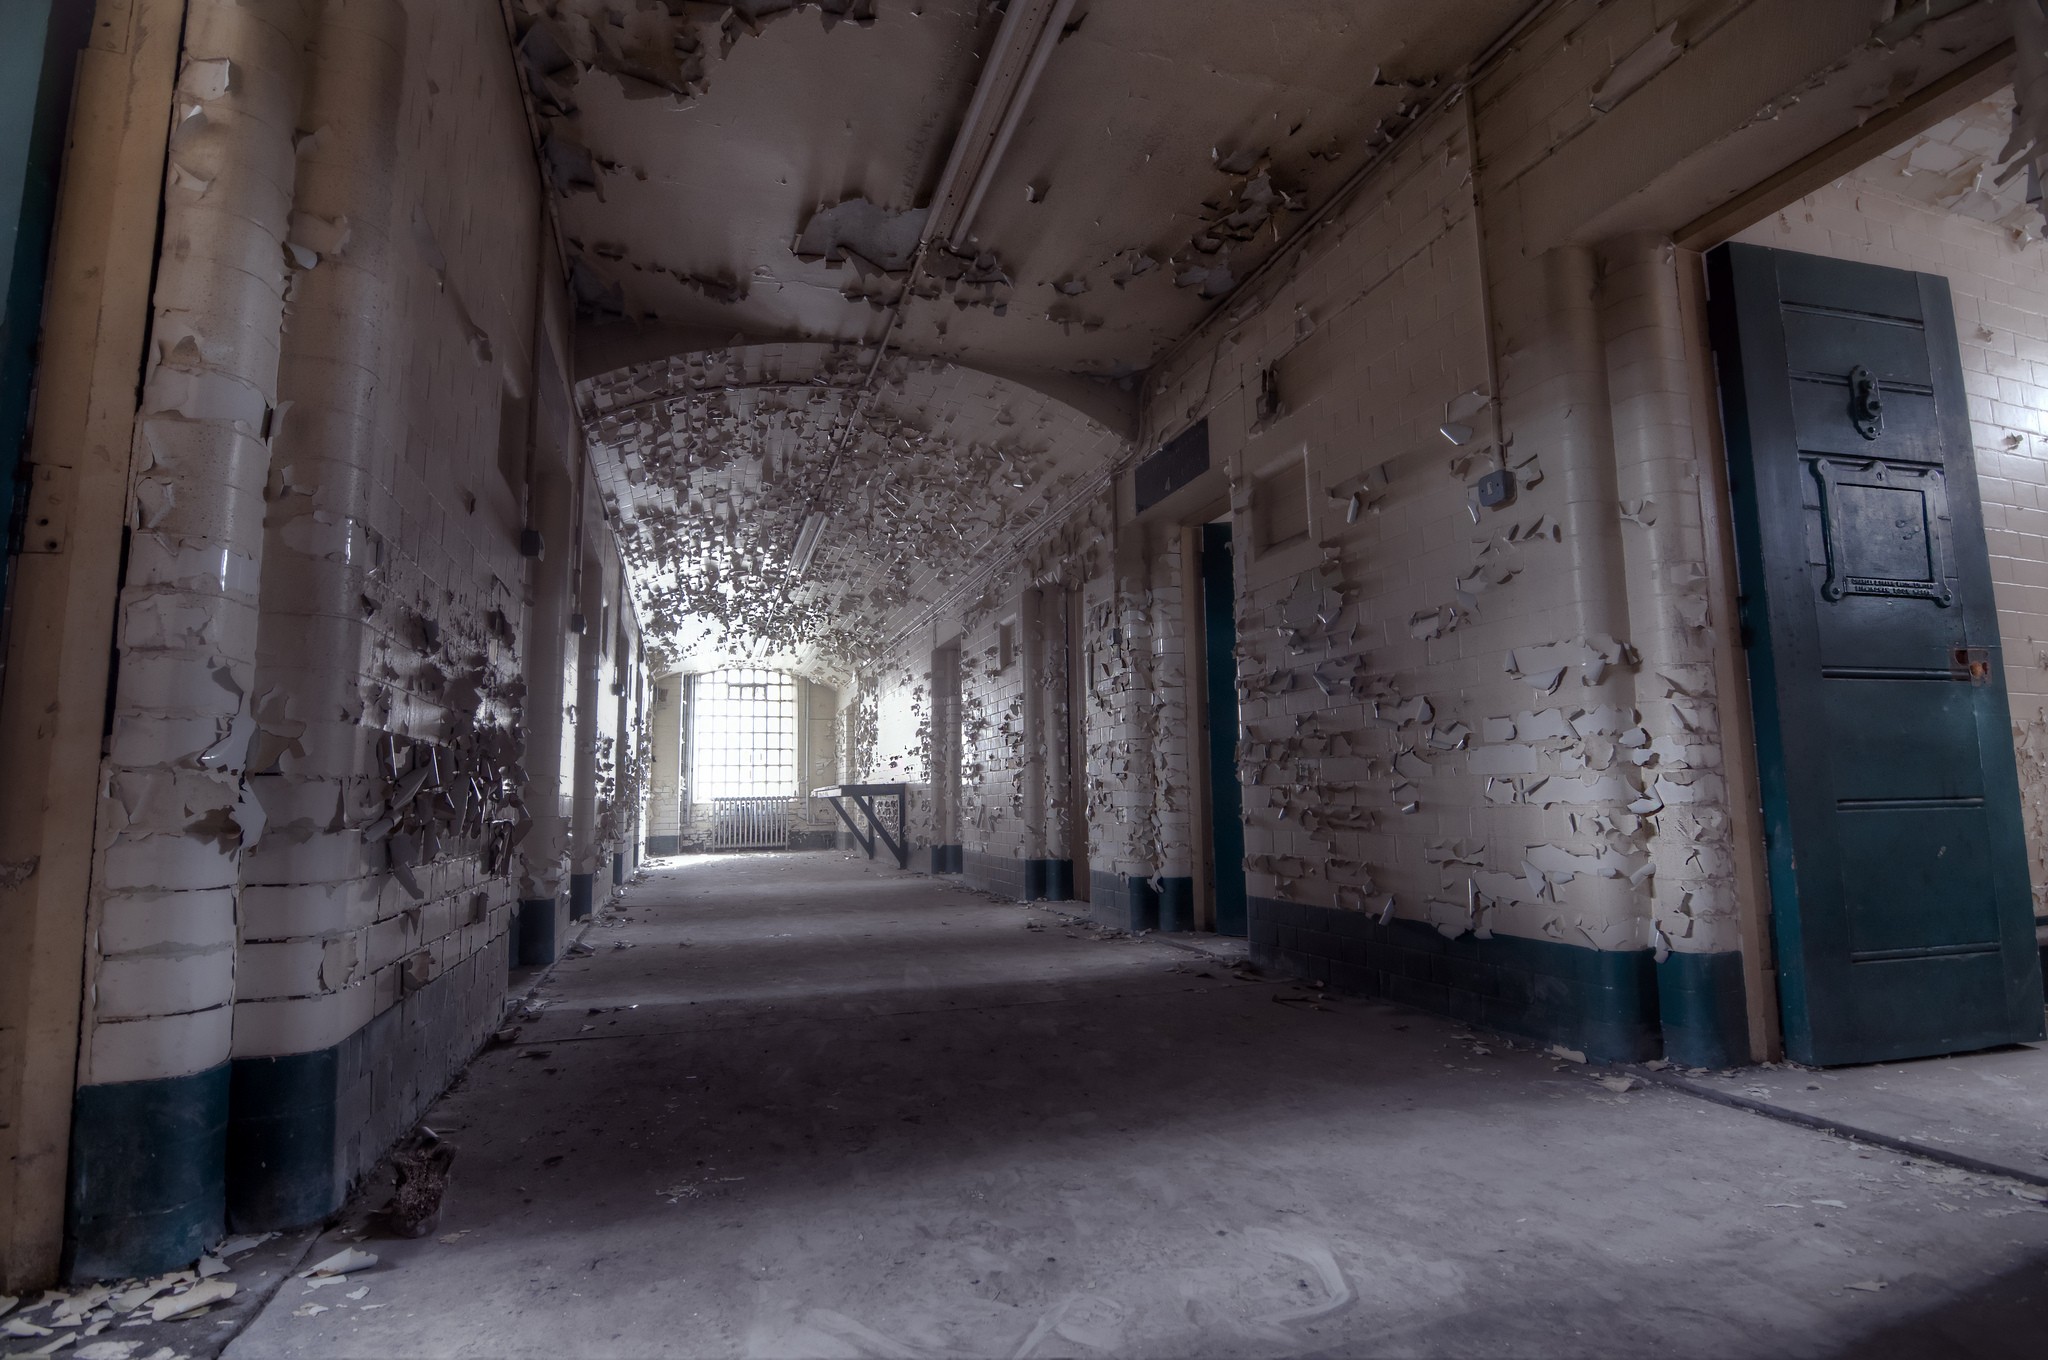 General 2048x1360 prison building interior hallway old building abandoned ruins